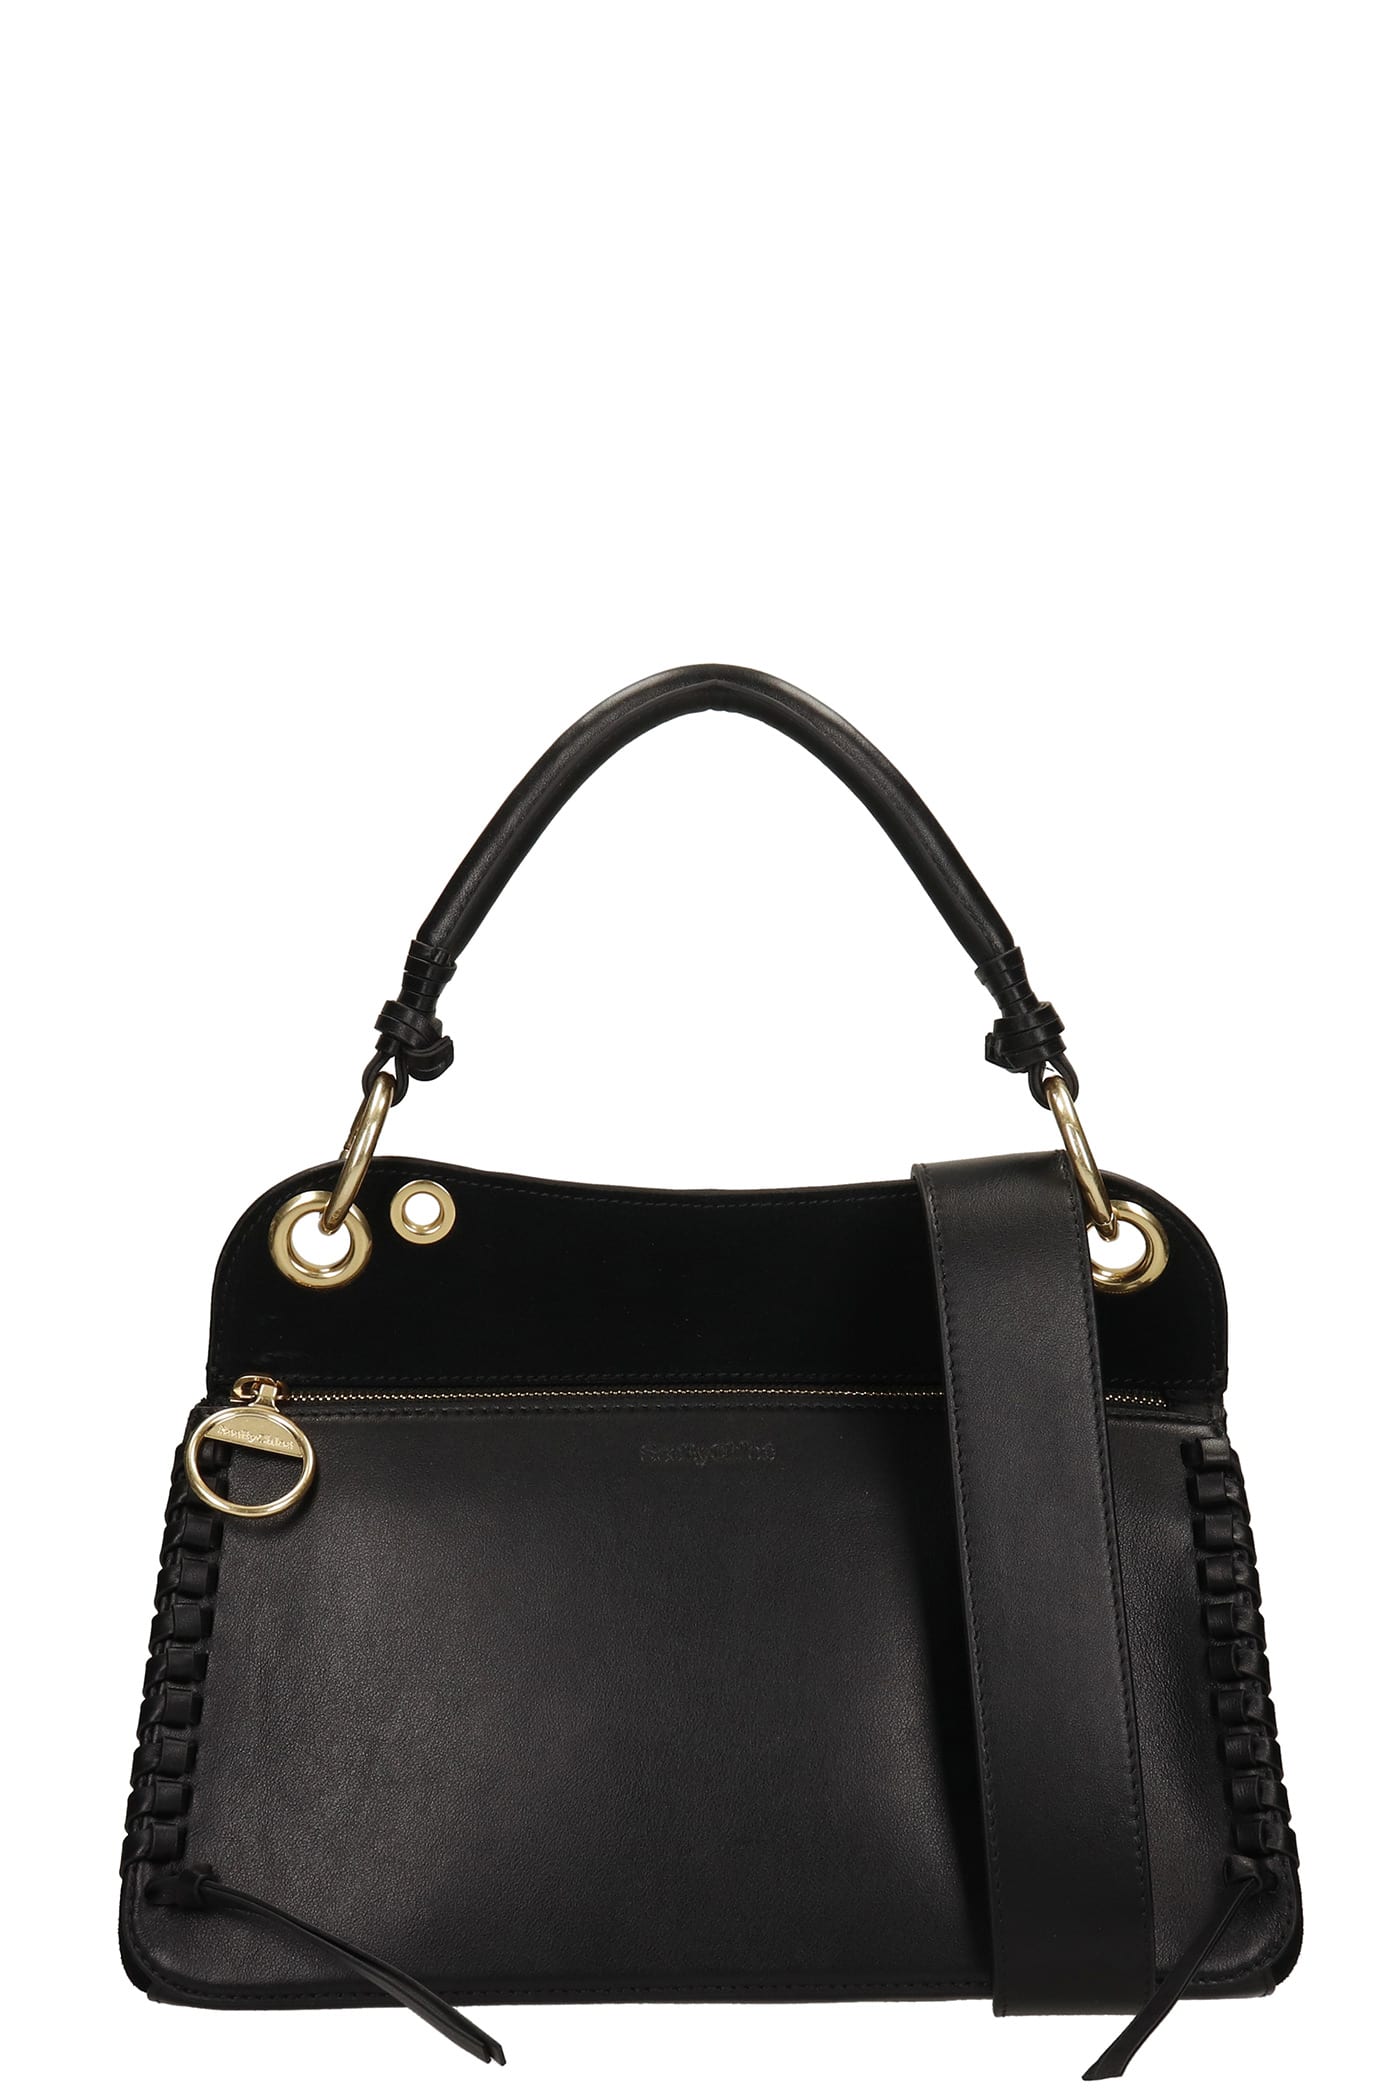 See by Chloé Tilda Shoulder Bag In Black Suede And Leather